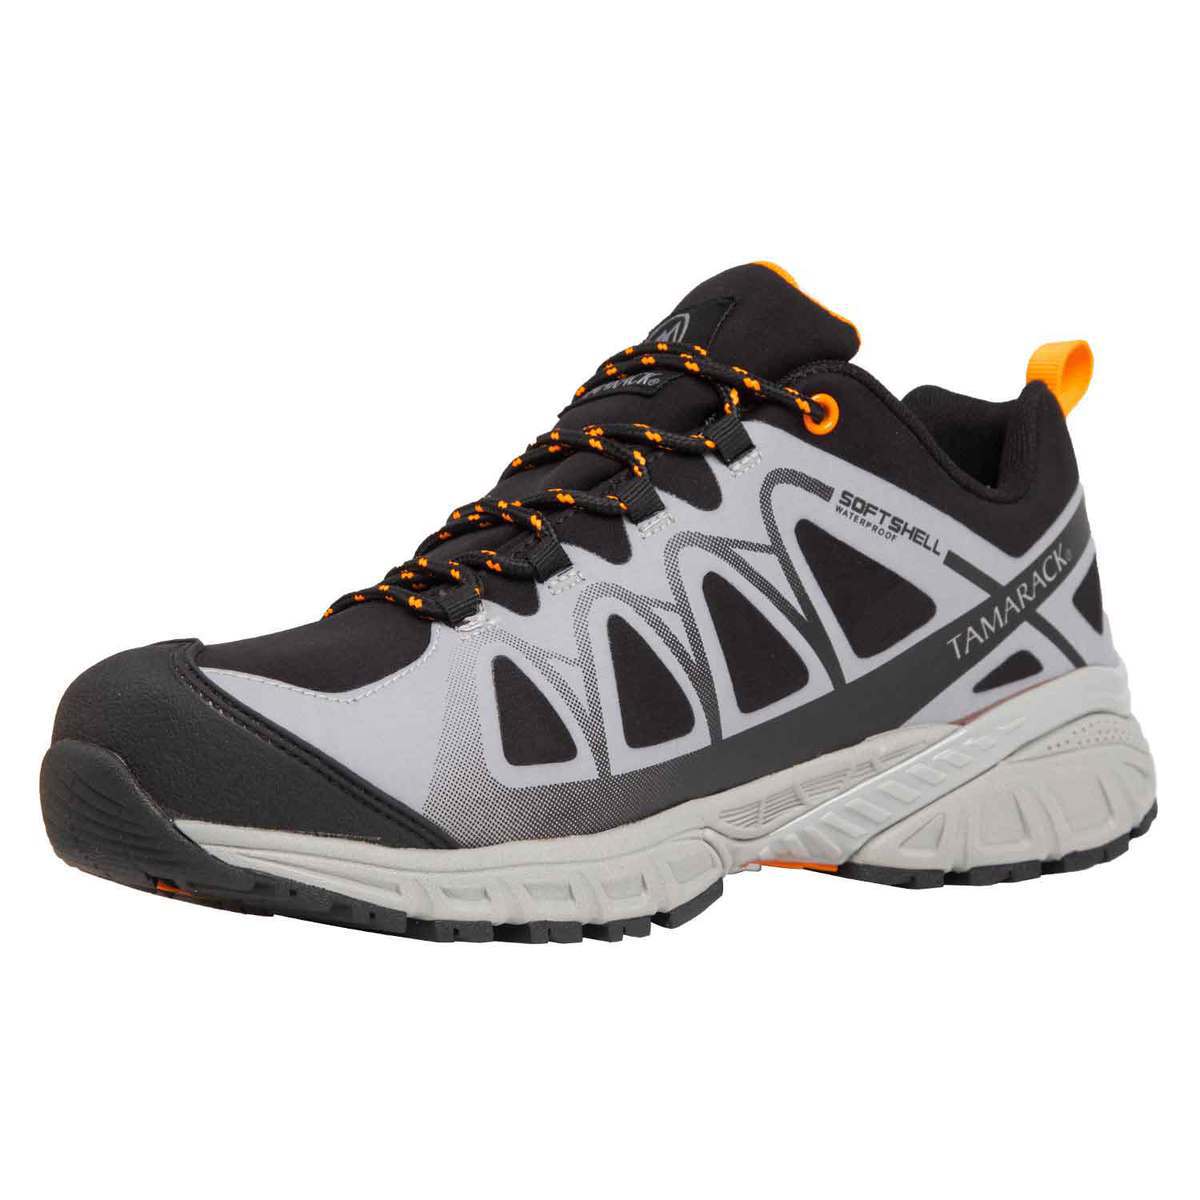 Tamarack Men's Dakota Waterproof Low Hiking Shoes | Sportsman's Warehouse